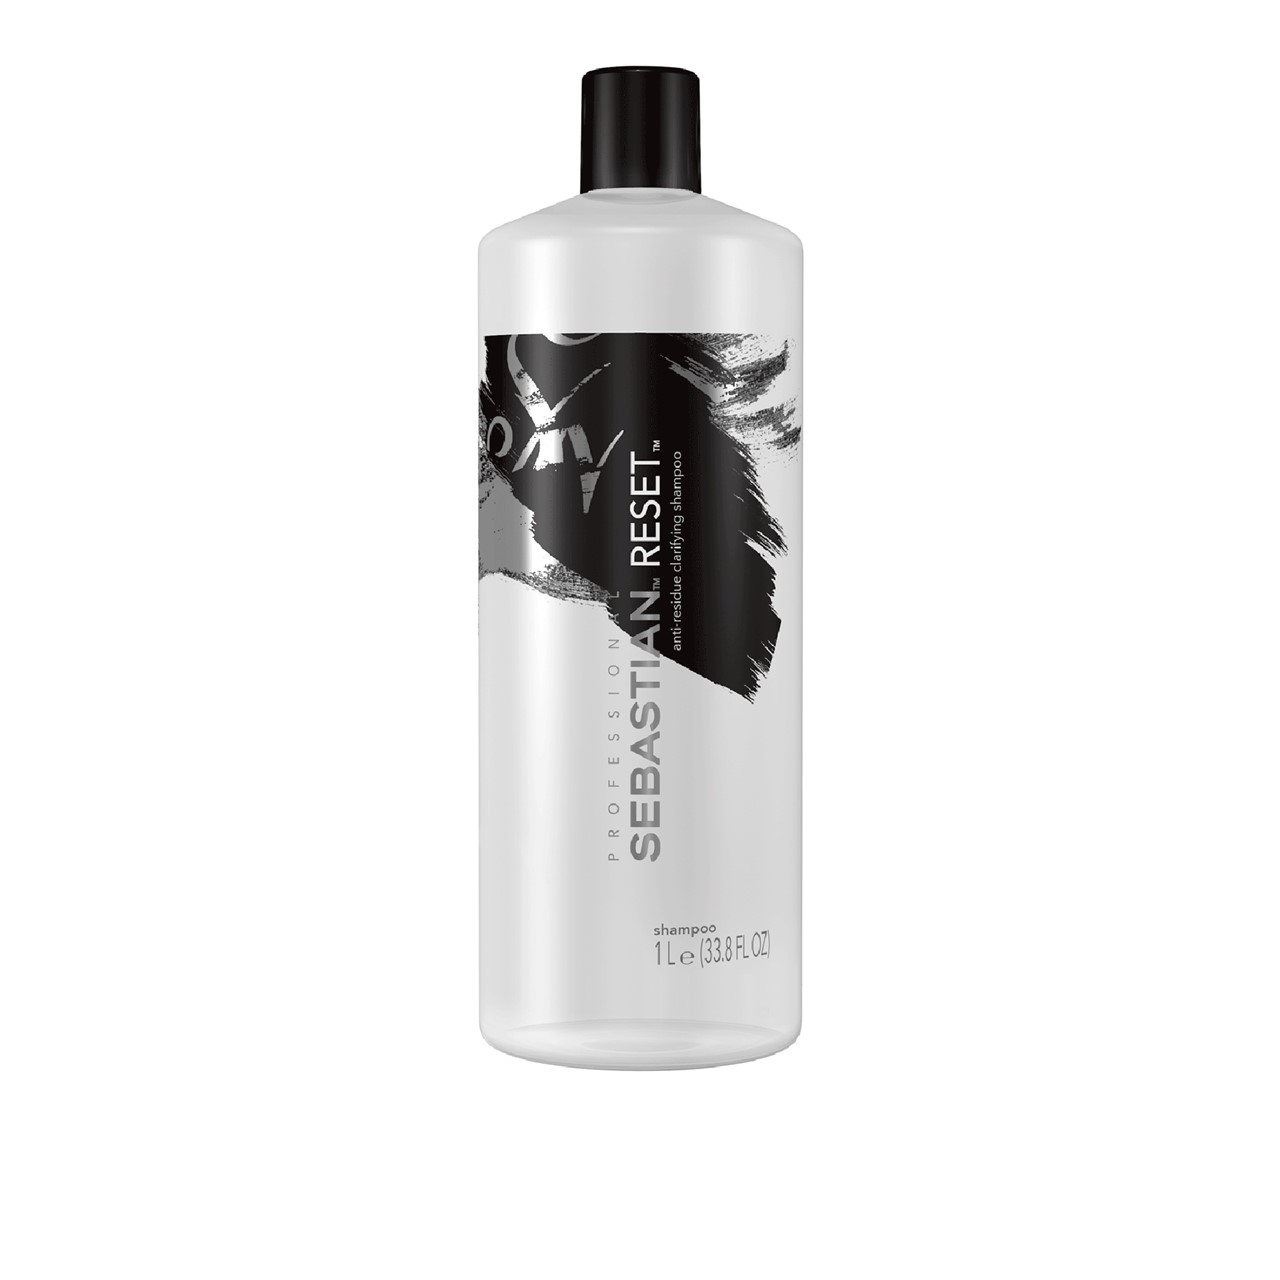 Sebastian Professional Reset Anti-Residue Clarifying Shampoo 1L (33.81fl oz)